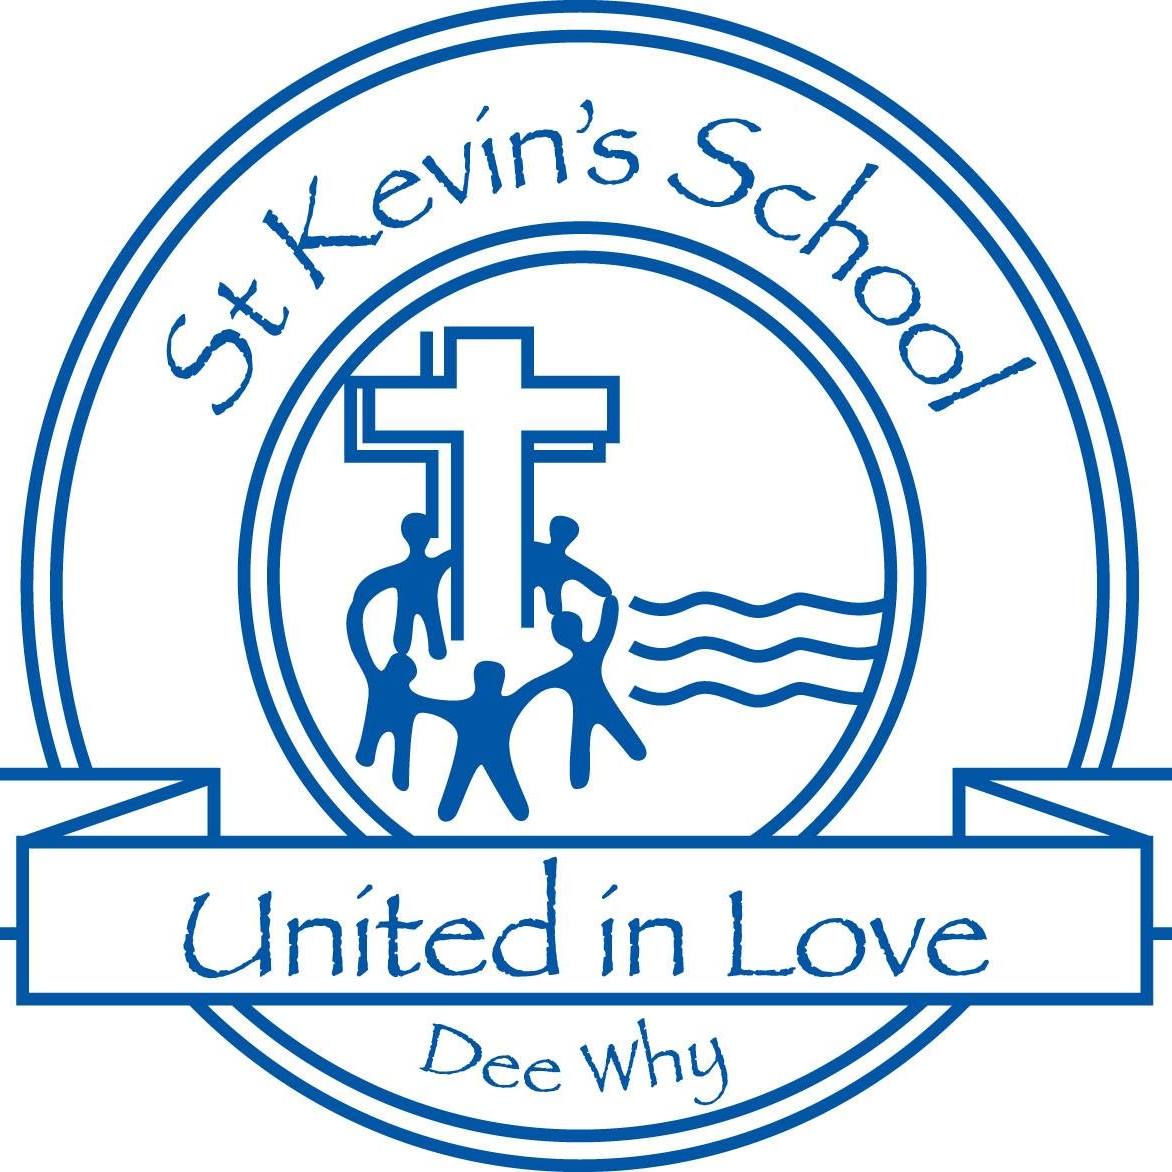 St Kevin's Catholic Primary School